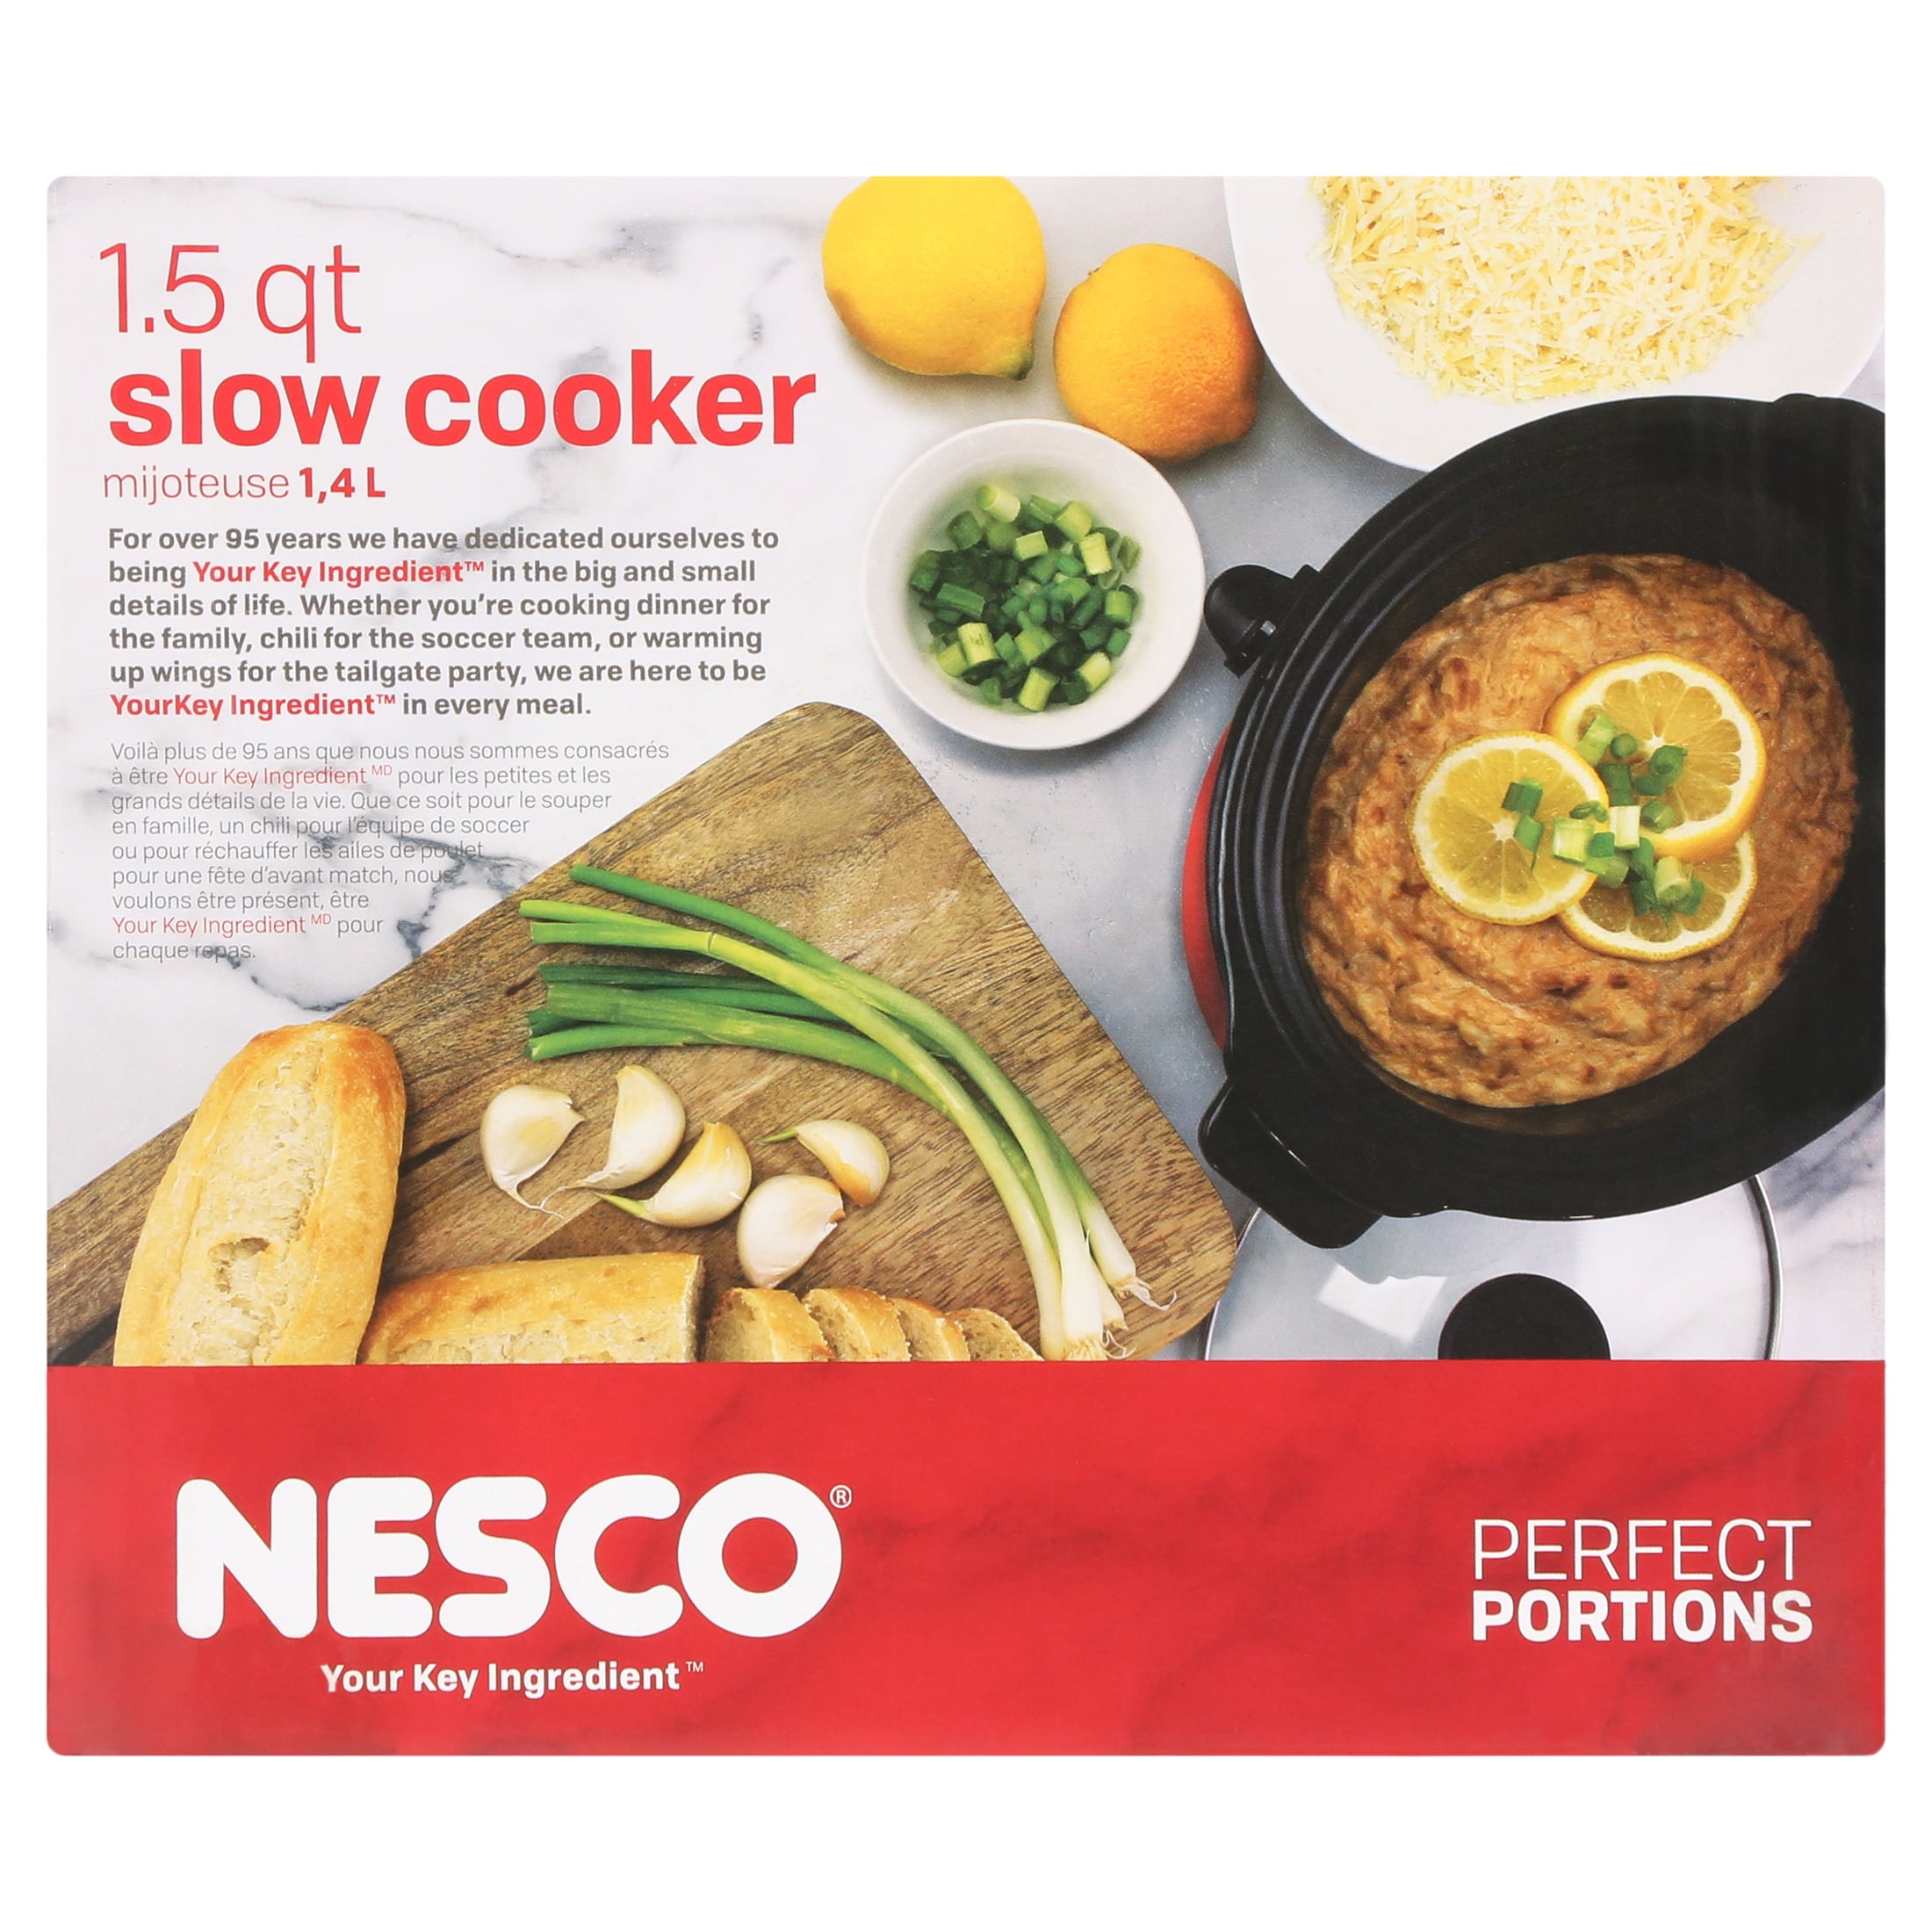 Nesco 1.5 qt Red Ceramic Slow Cooker - Ace Hardware